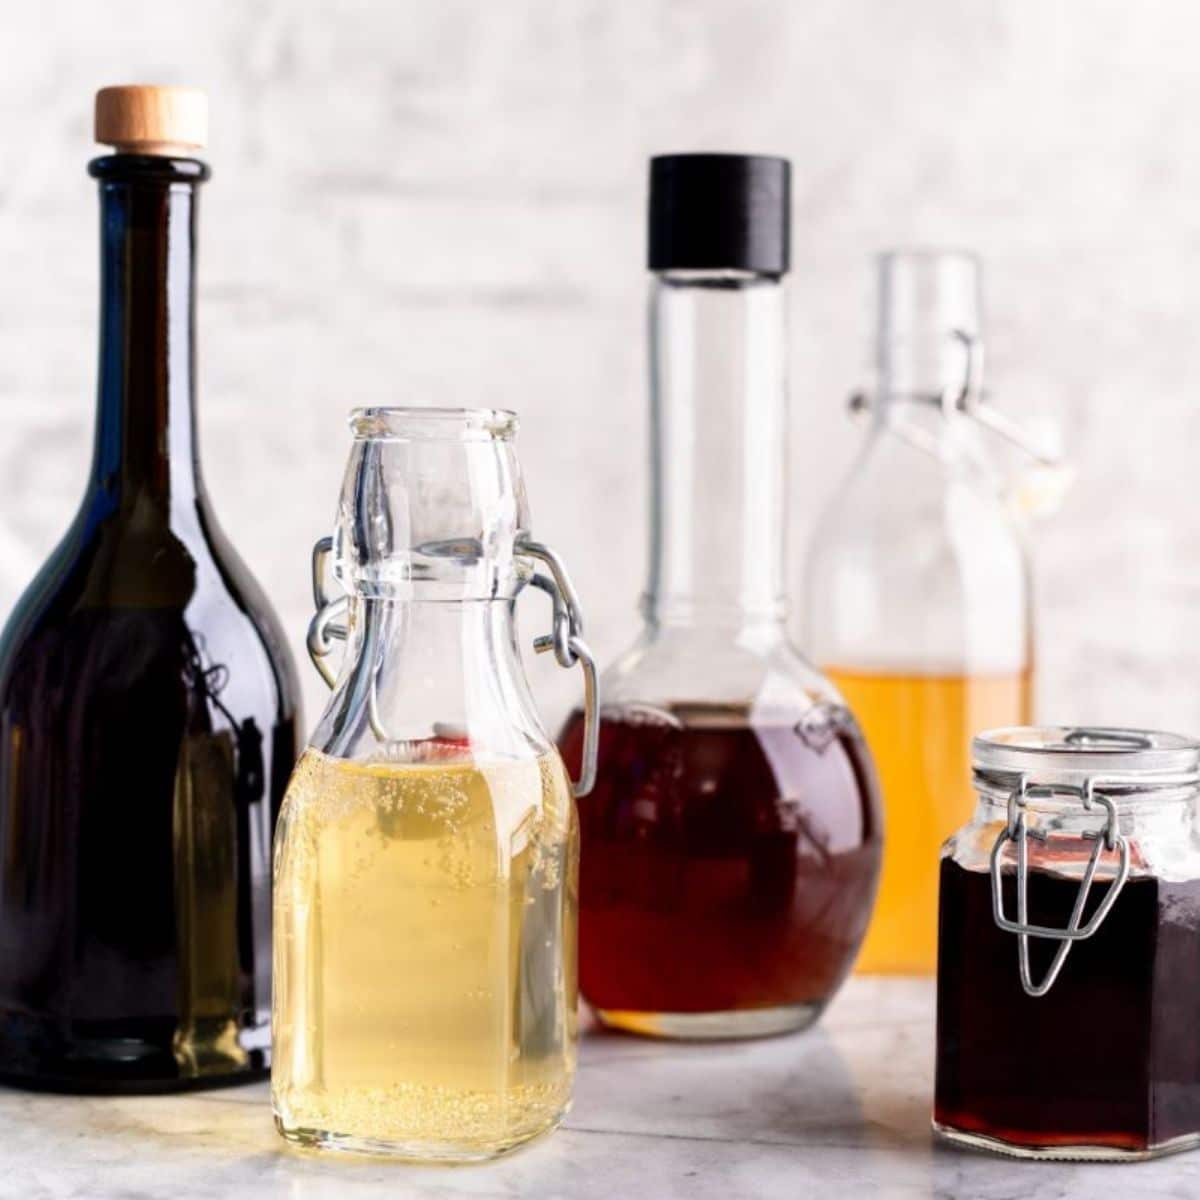 Different varieties of vinegar in glass bottles and jar